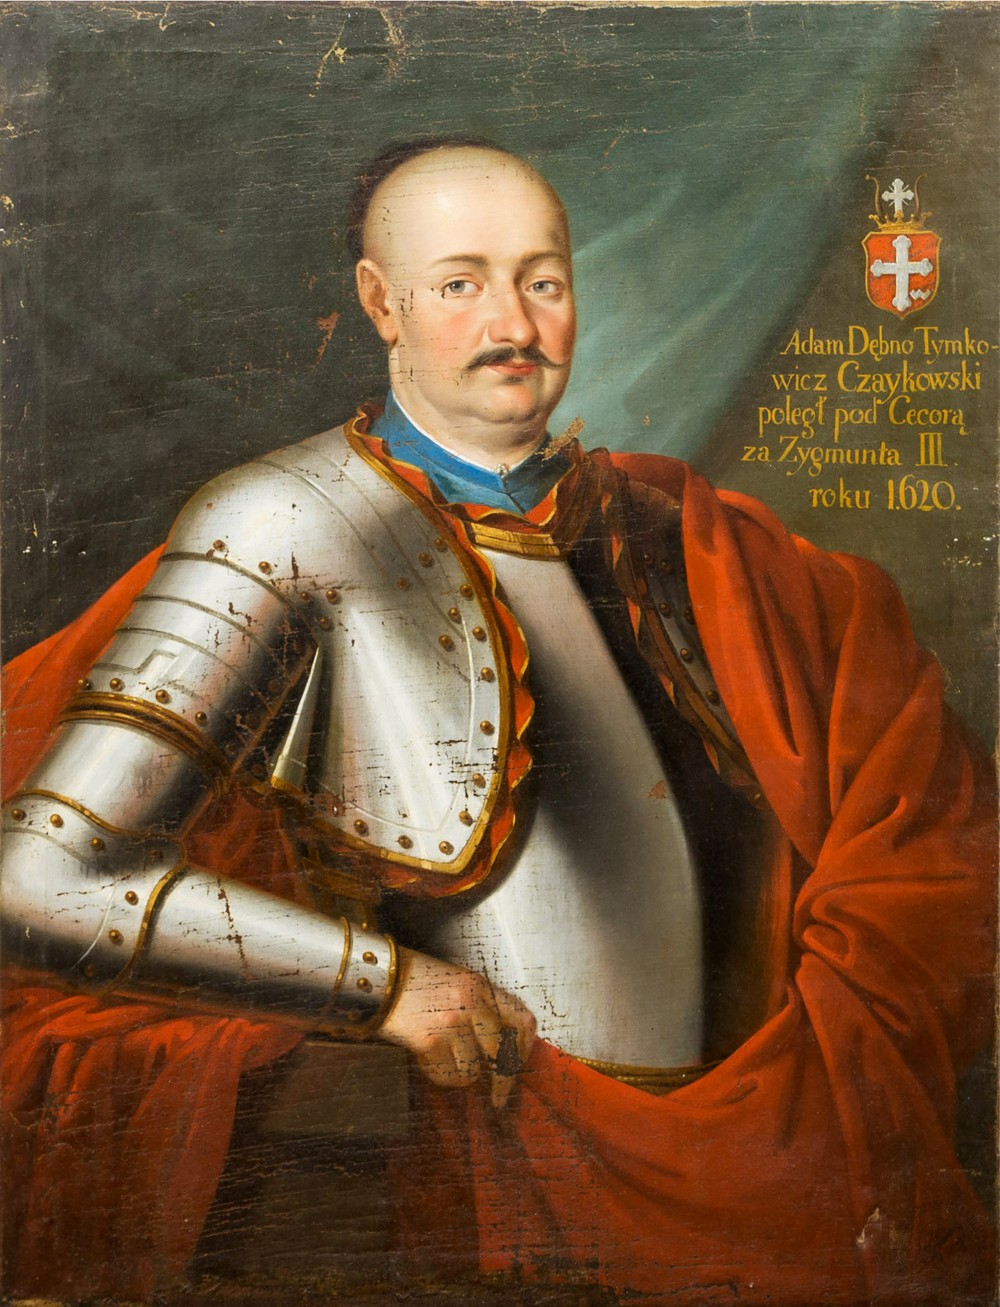 Старинный портрет «Адам Дебно Тумкович Чайковски» погиб под Цецорой за Зигмунта III в 1620 году